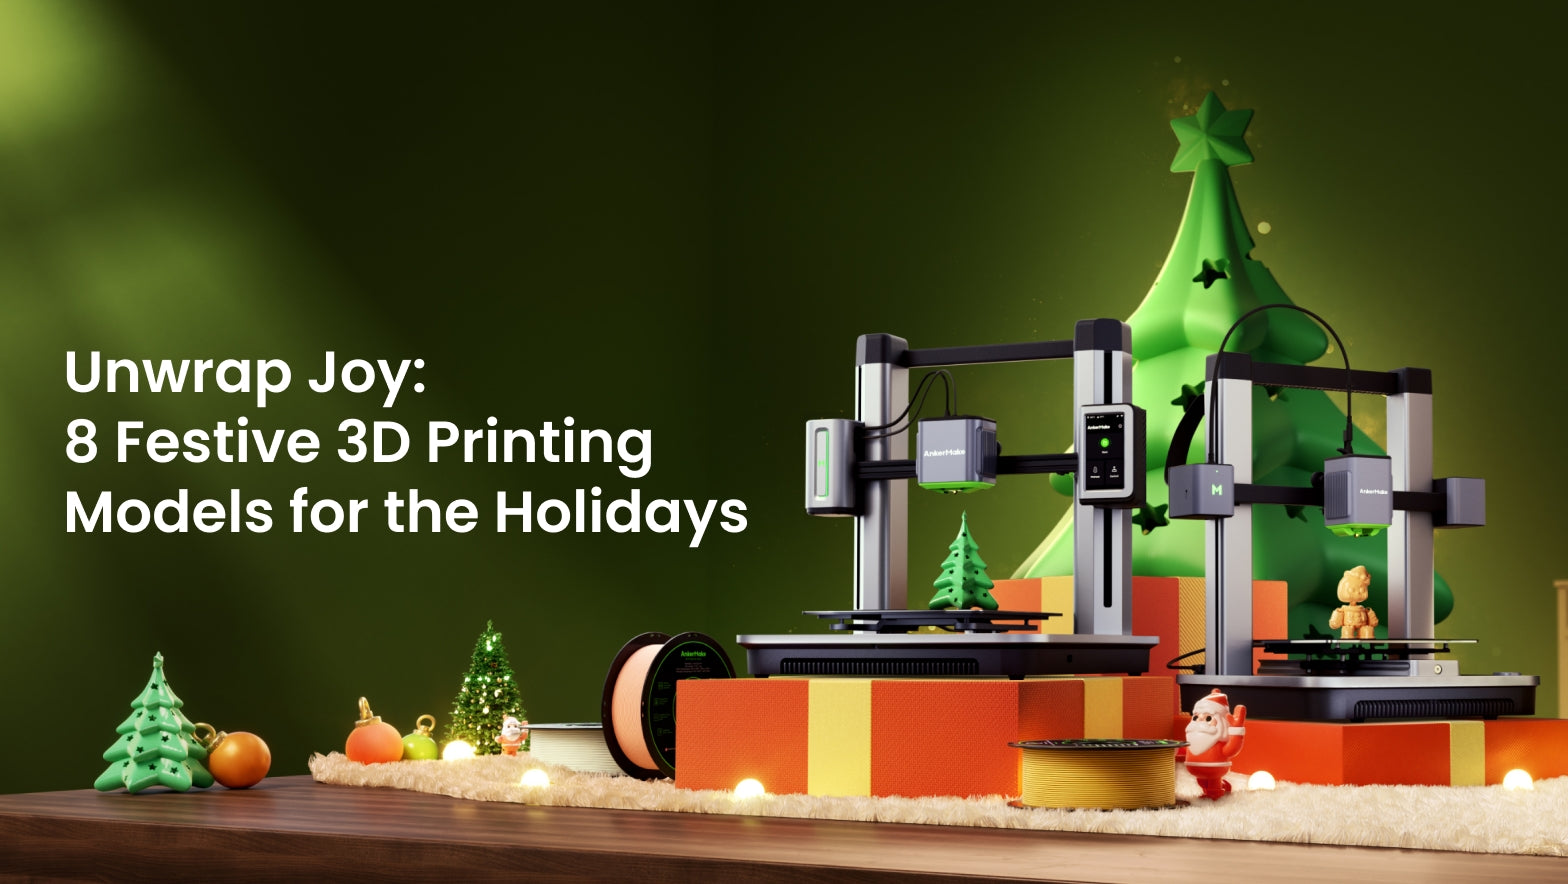 Unwrap Joy: 8 Festive 3D Printing Models for the Holidays